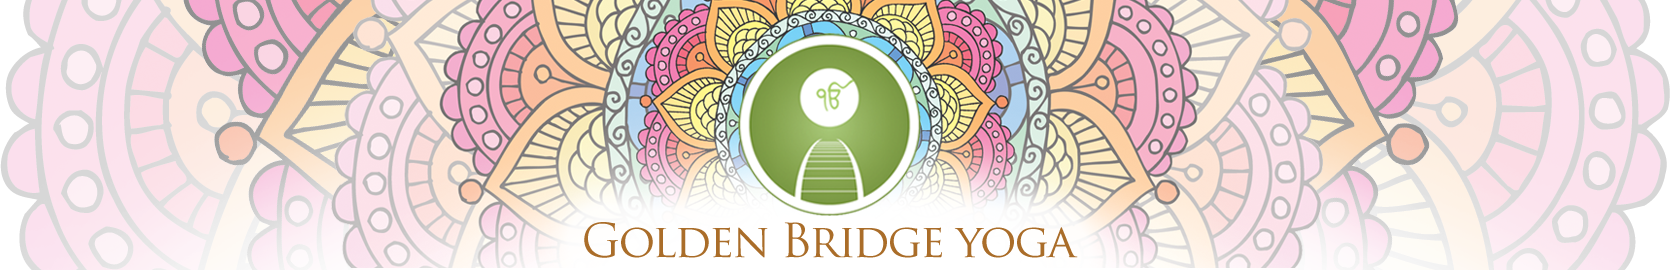 Golden Bridge Yoga Image